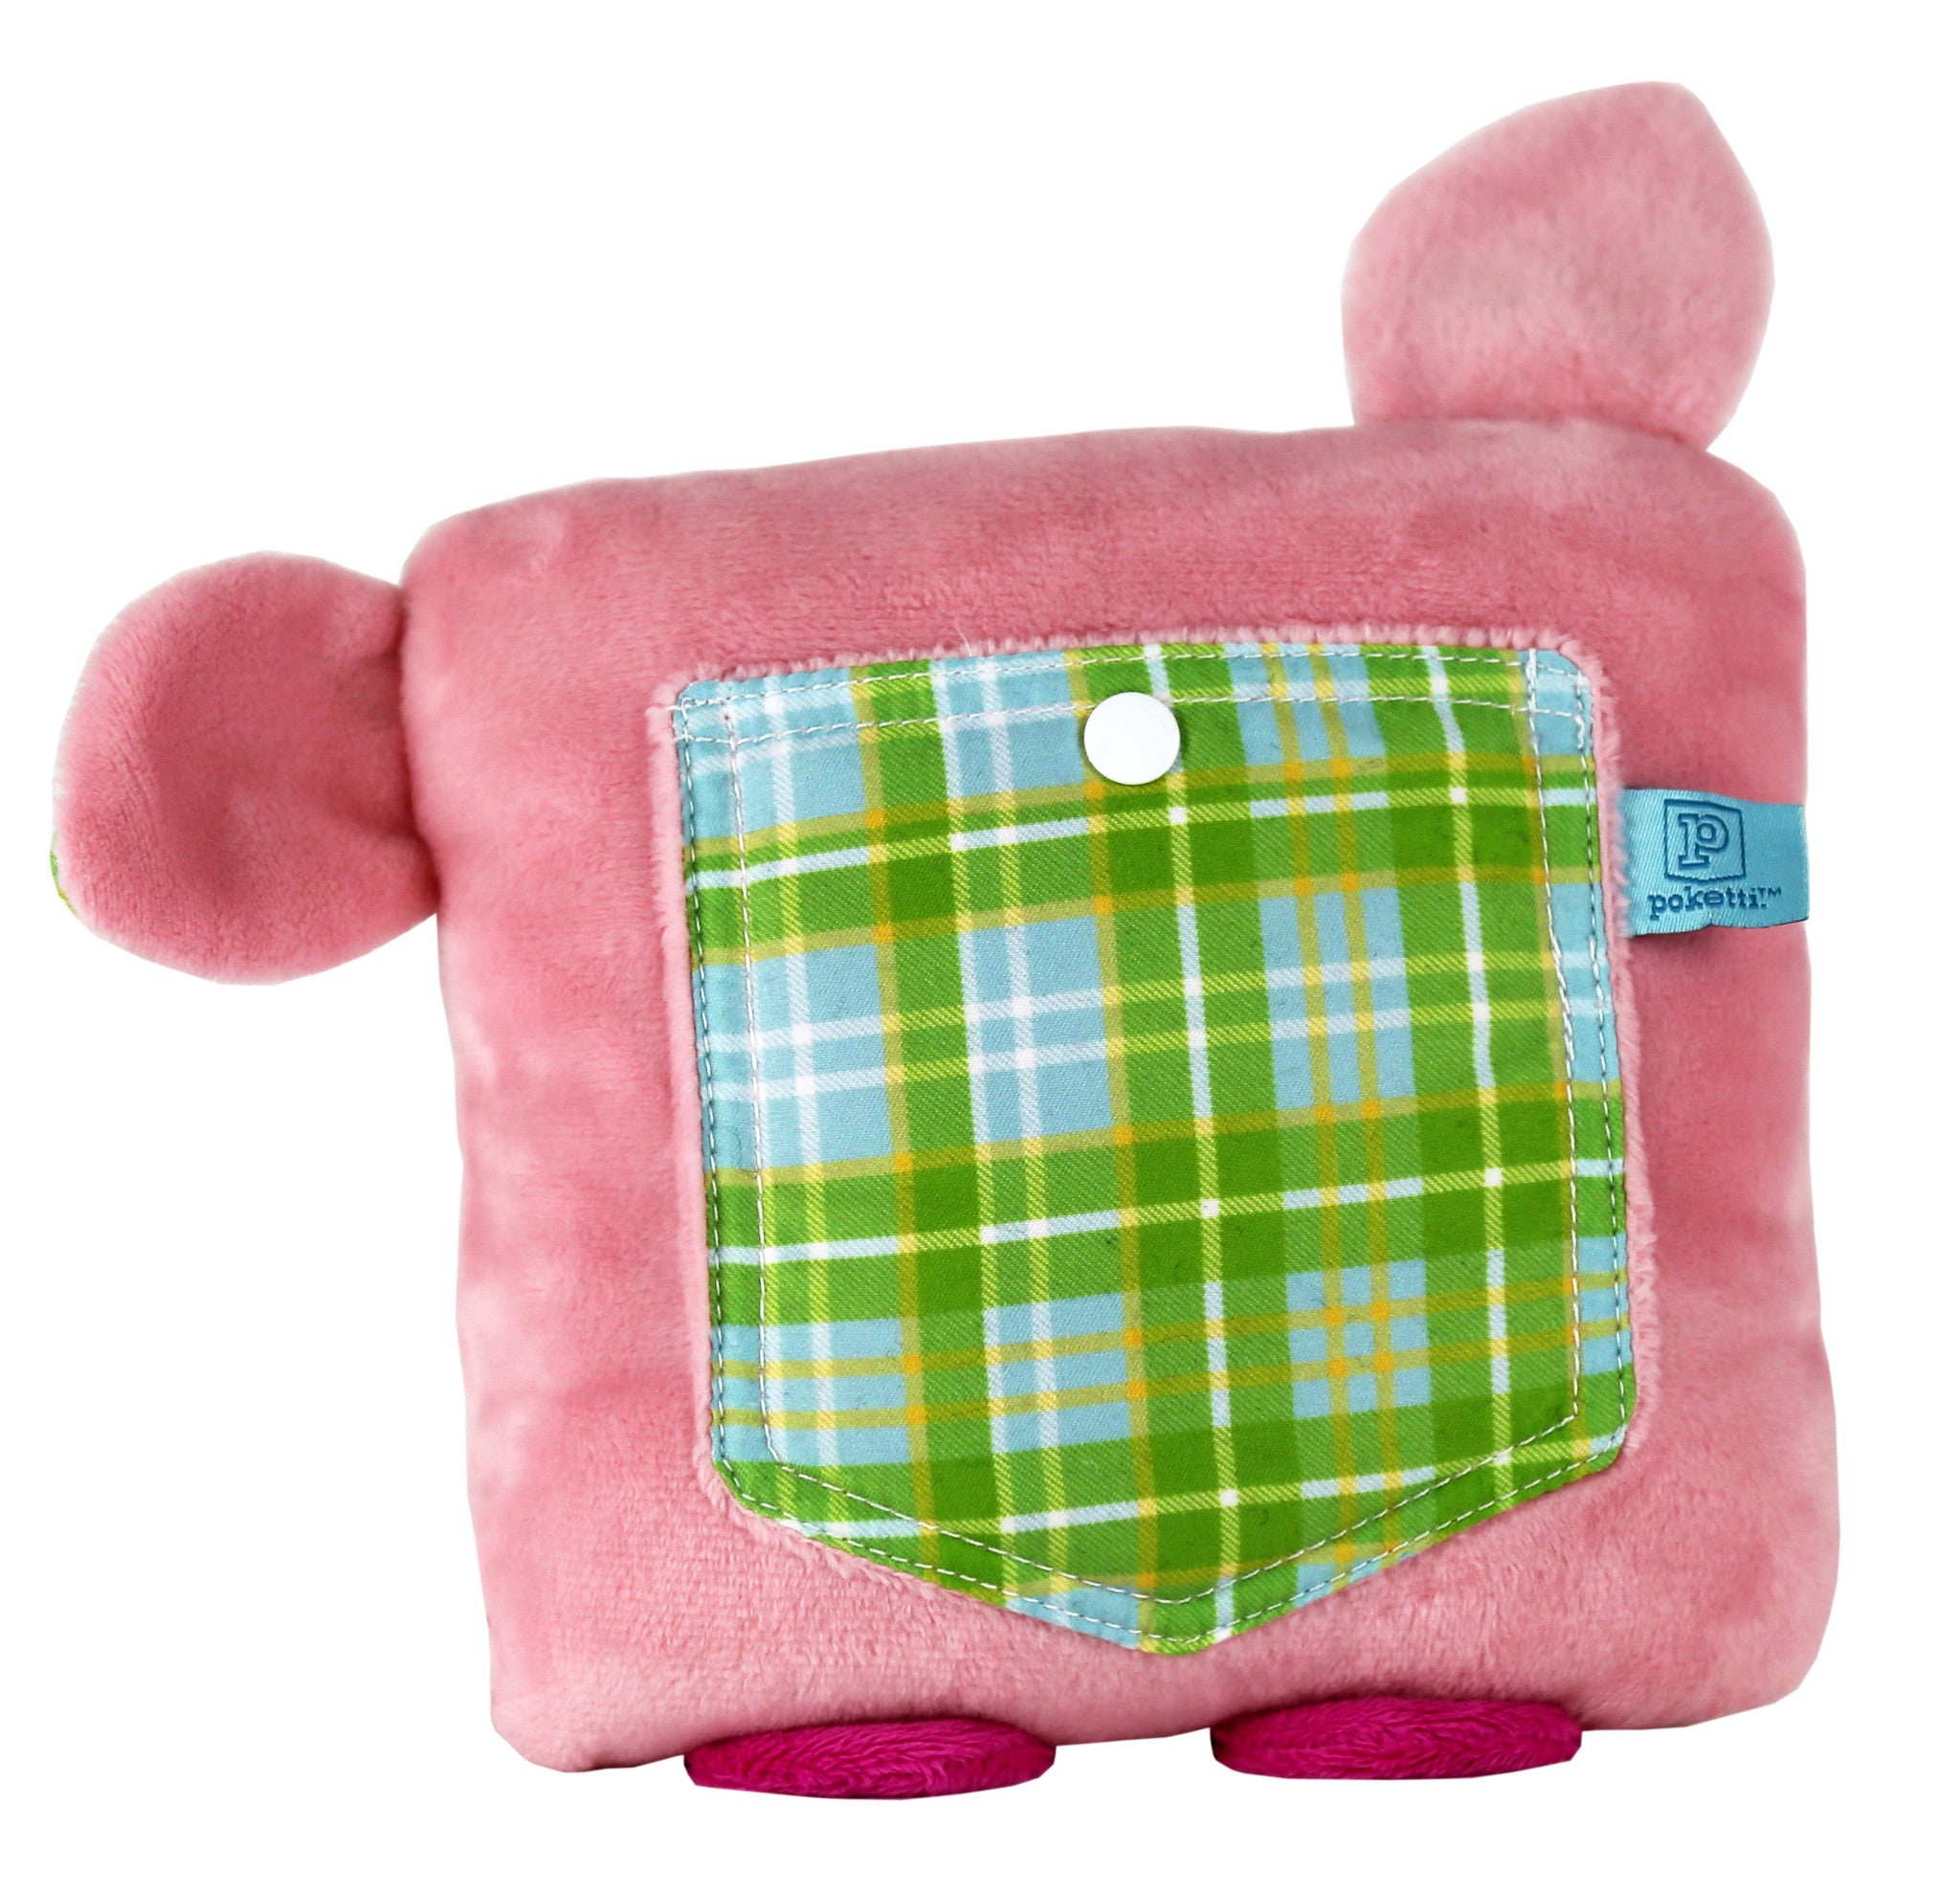 Plush toy pig stuffed animal with a useful back pocket - pocket detail